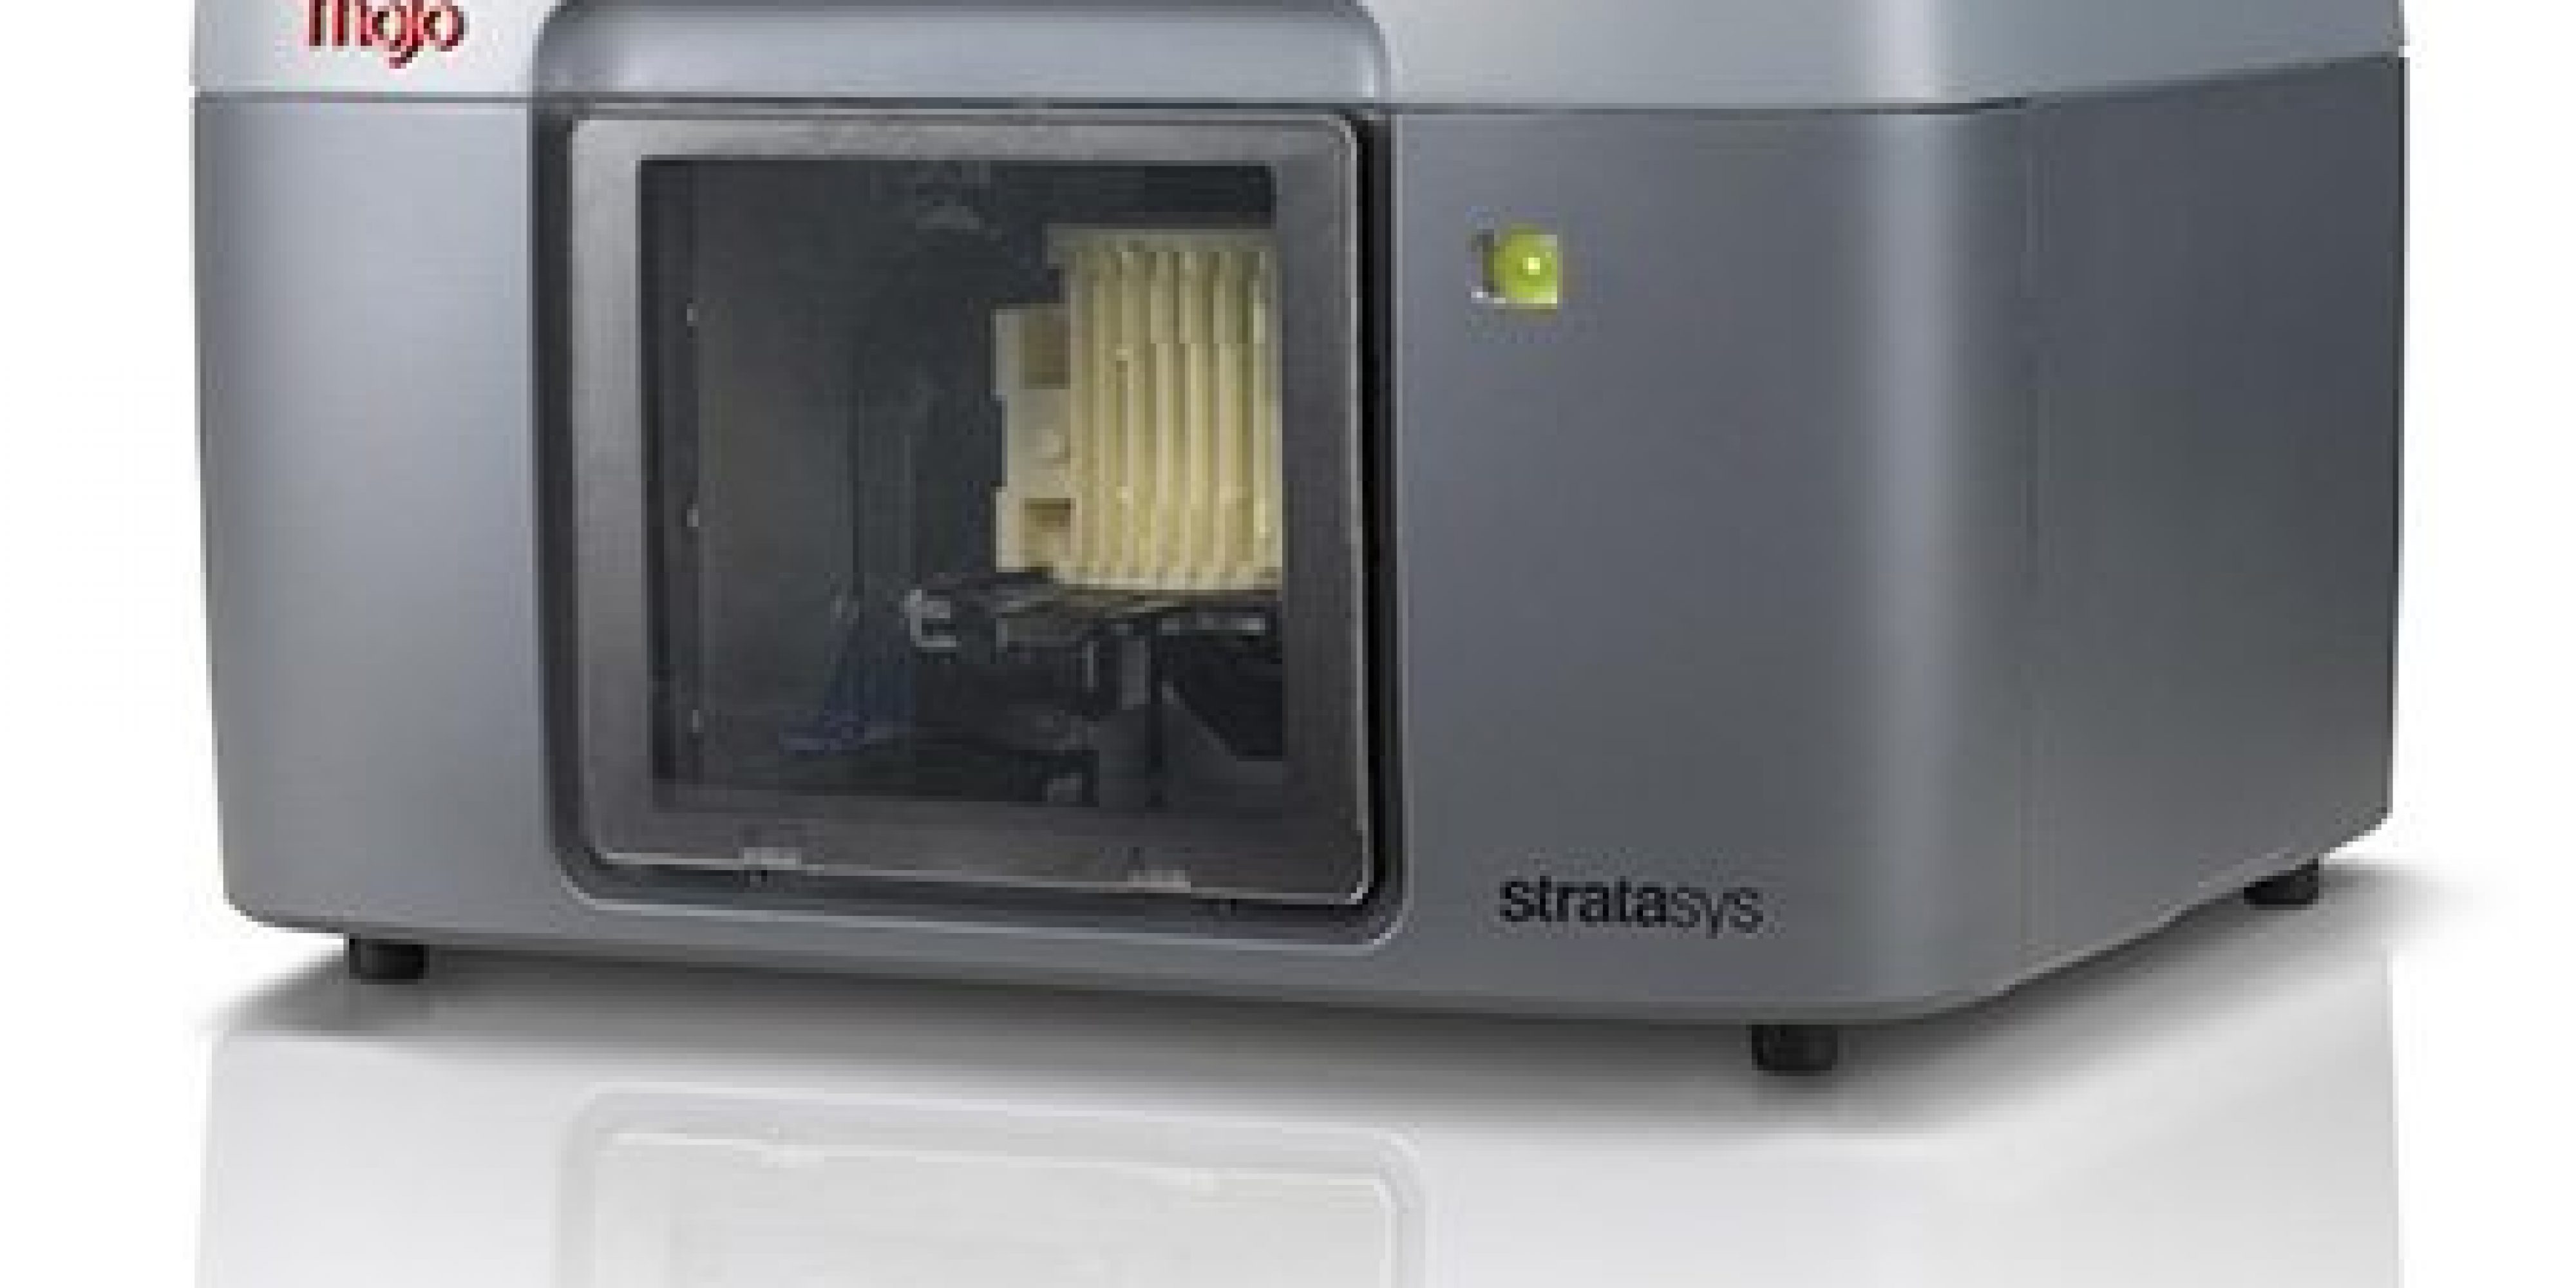 Imprimante 3D